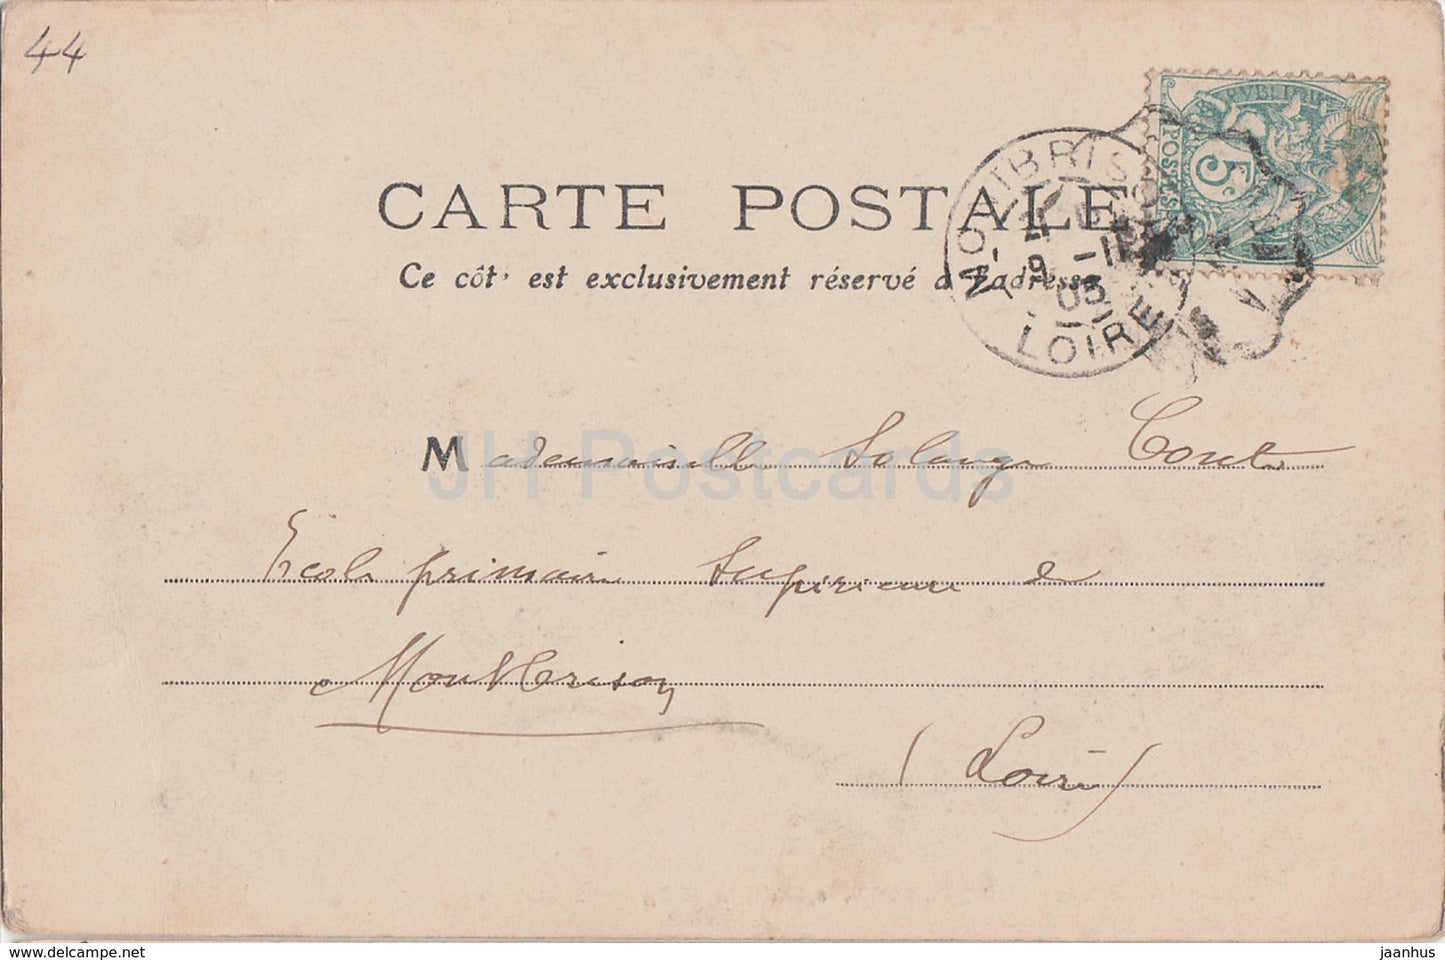 Clisson - Le Chateau - La Porte du Bastion - castle - old postcard - 1903 - France - used